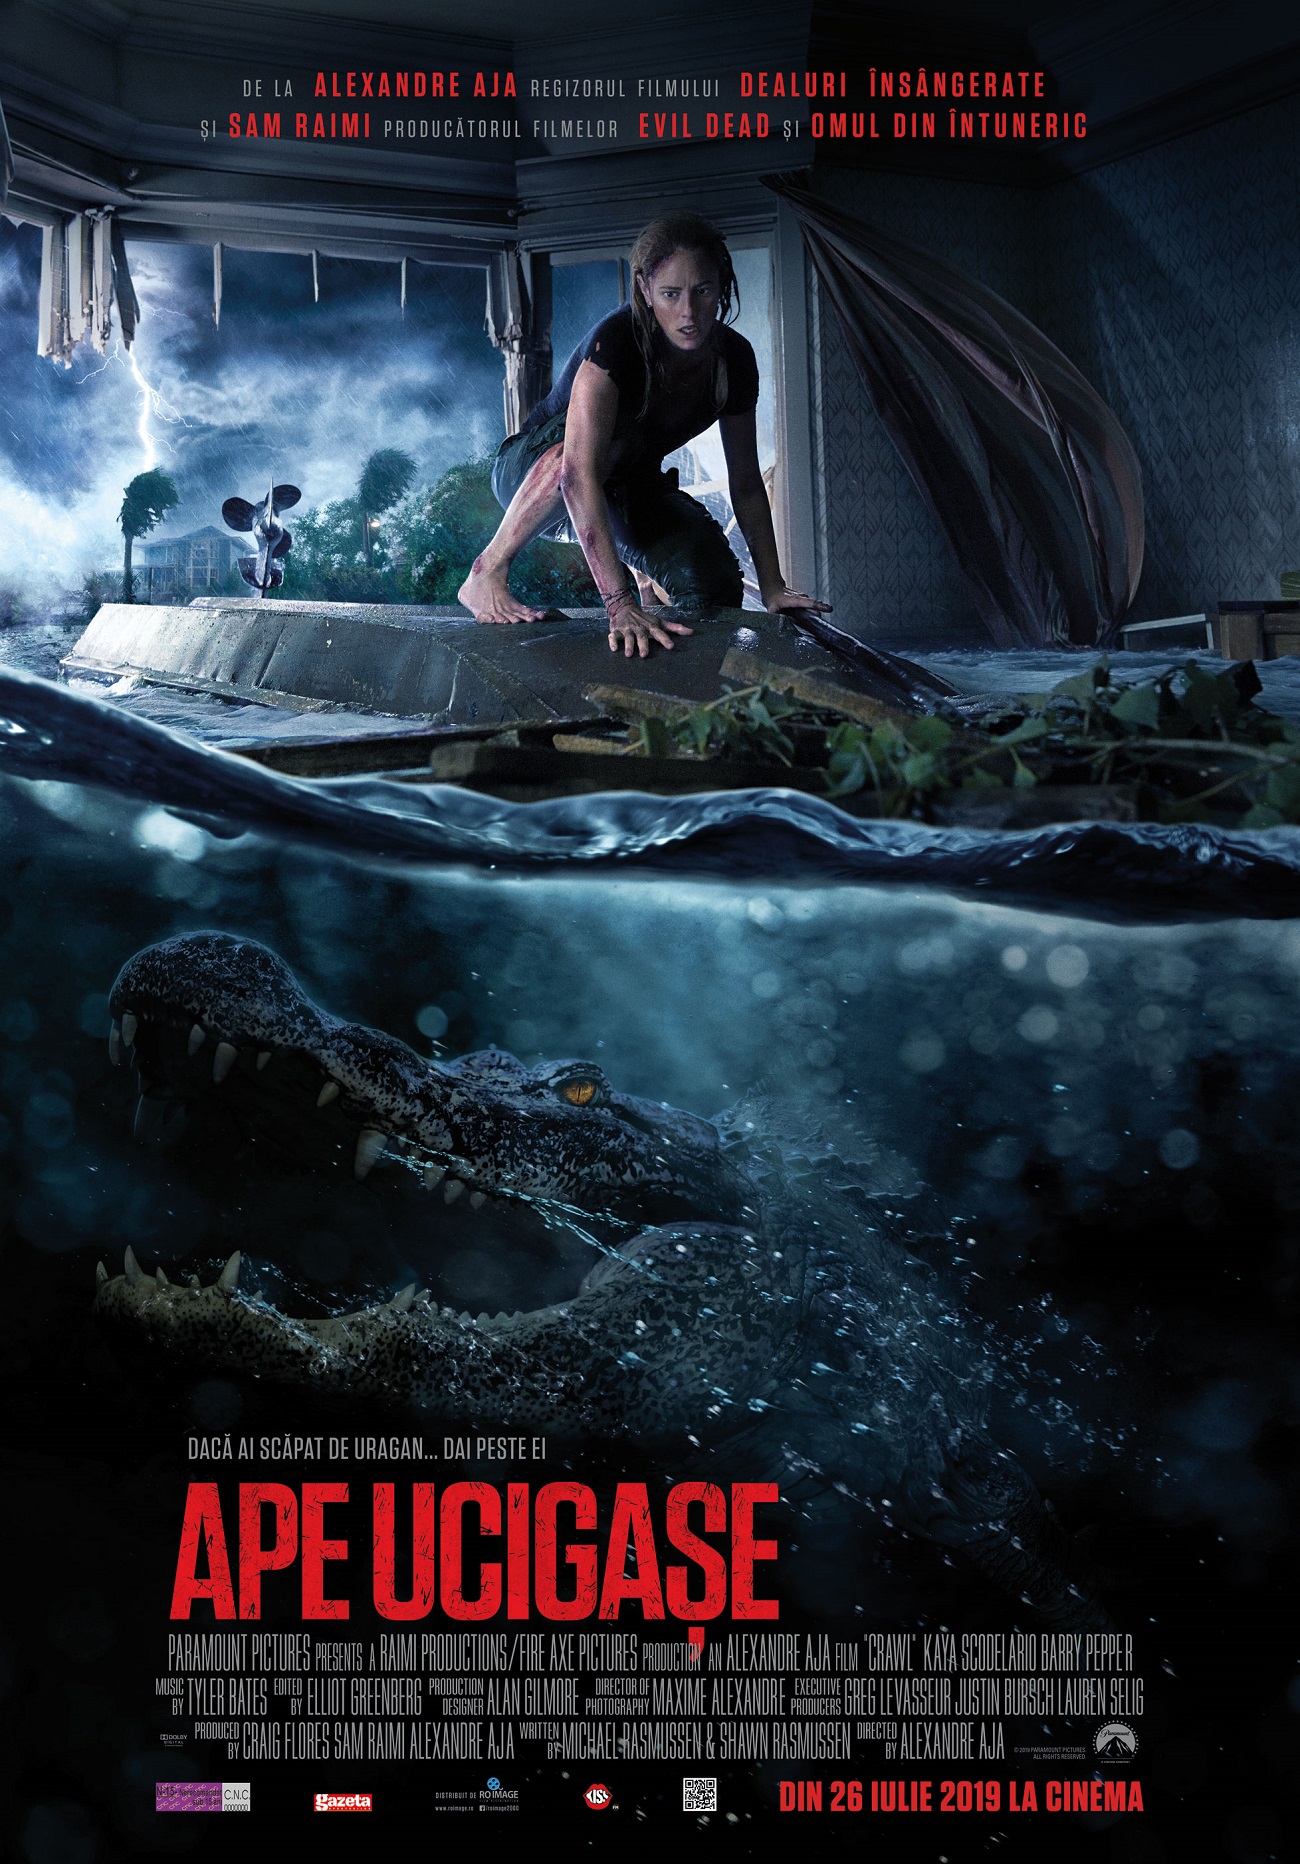 Ape ucigase - Crawl POSTER